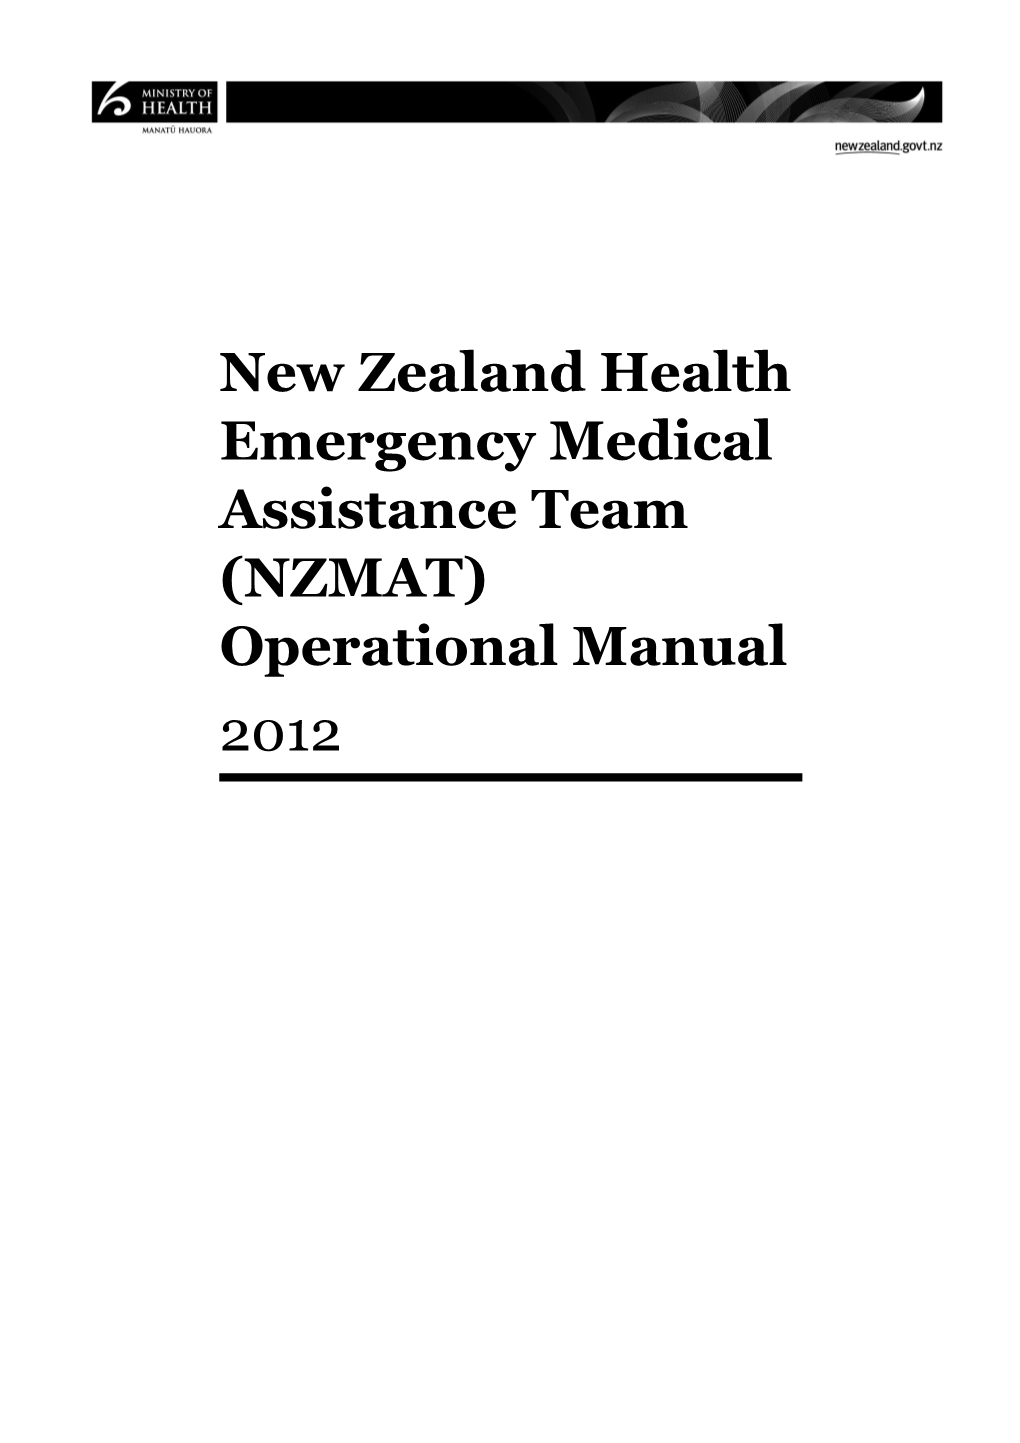 New Zealand Health Emergency Medical Assistance Team (NZMAT) Operational Manual